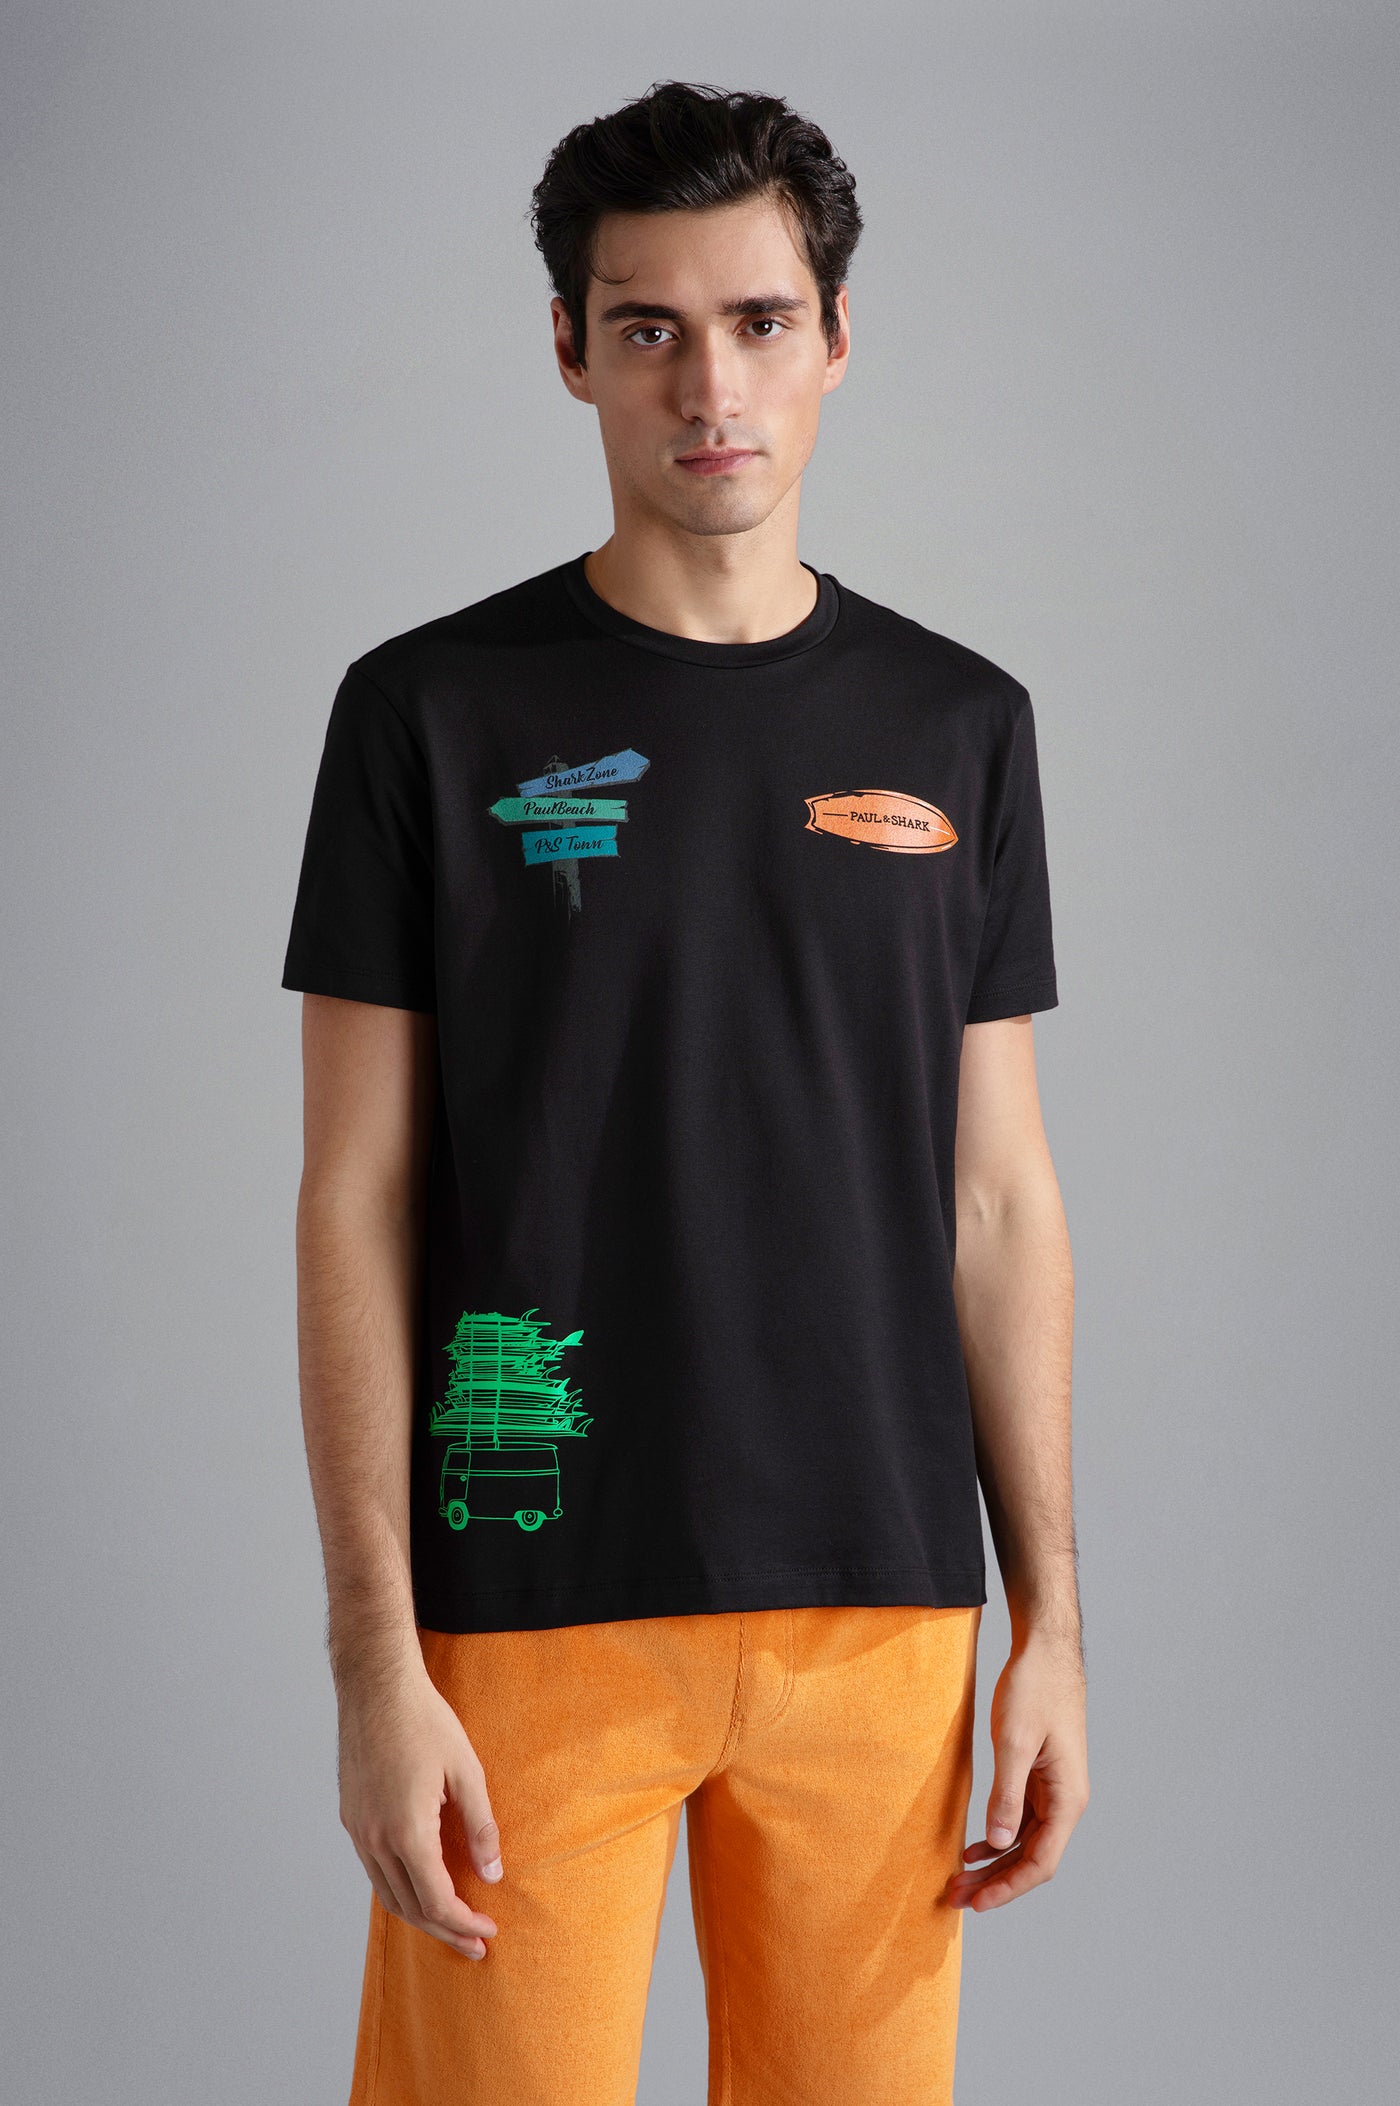 Paul & Shark T-shirt with Prints | Black